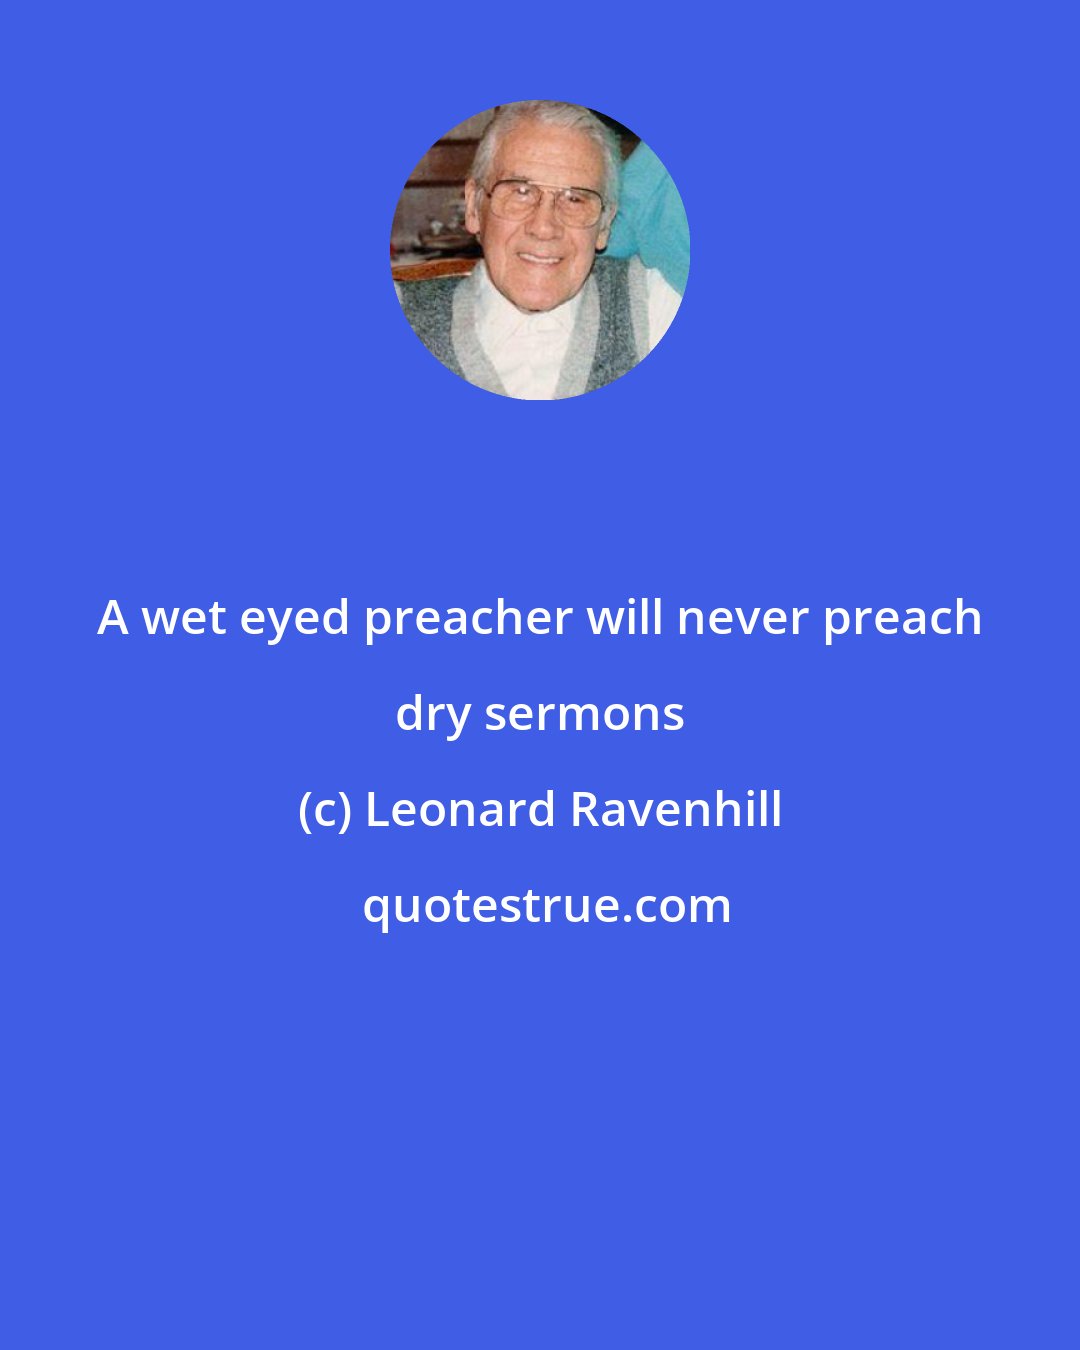 Leonard Ravenhill: A wet eyed preacher will never preach dry sermons